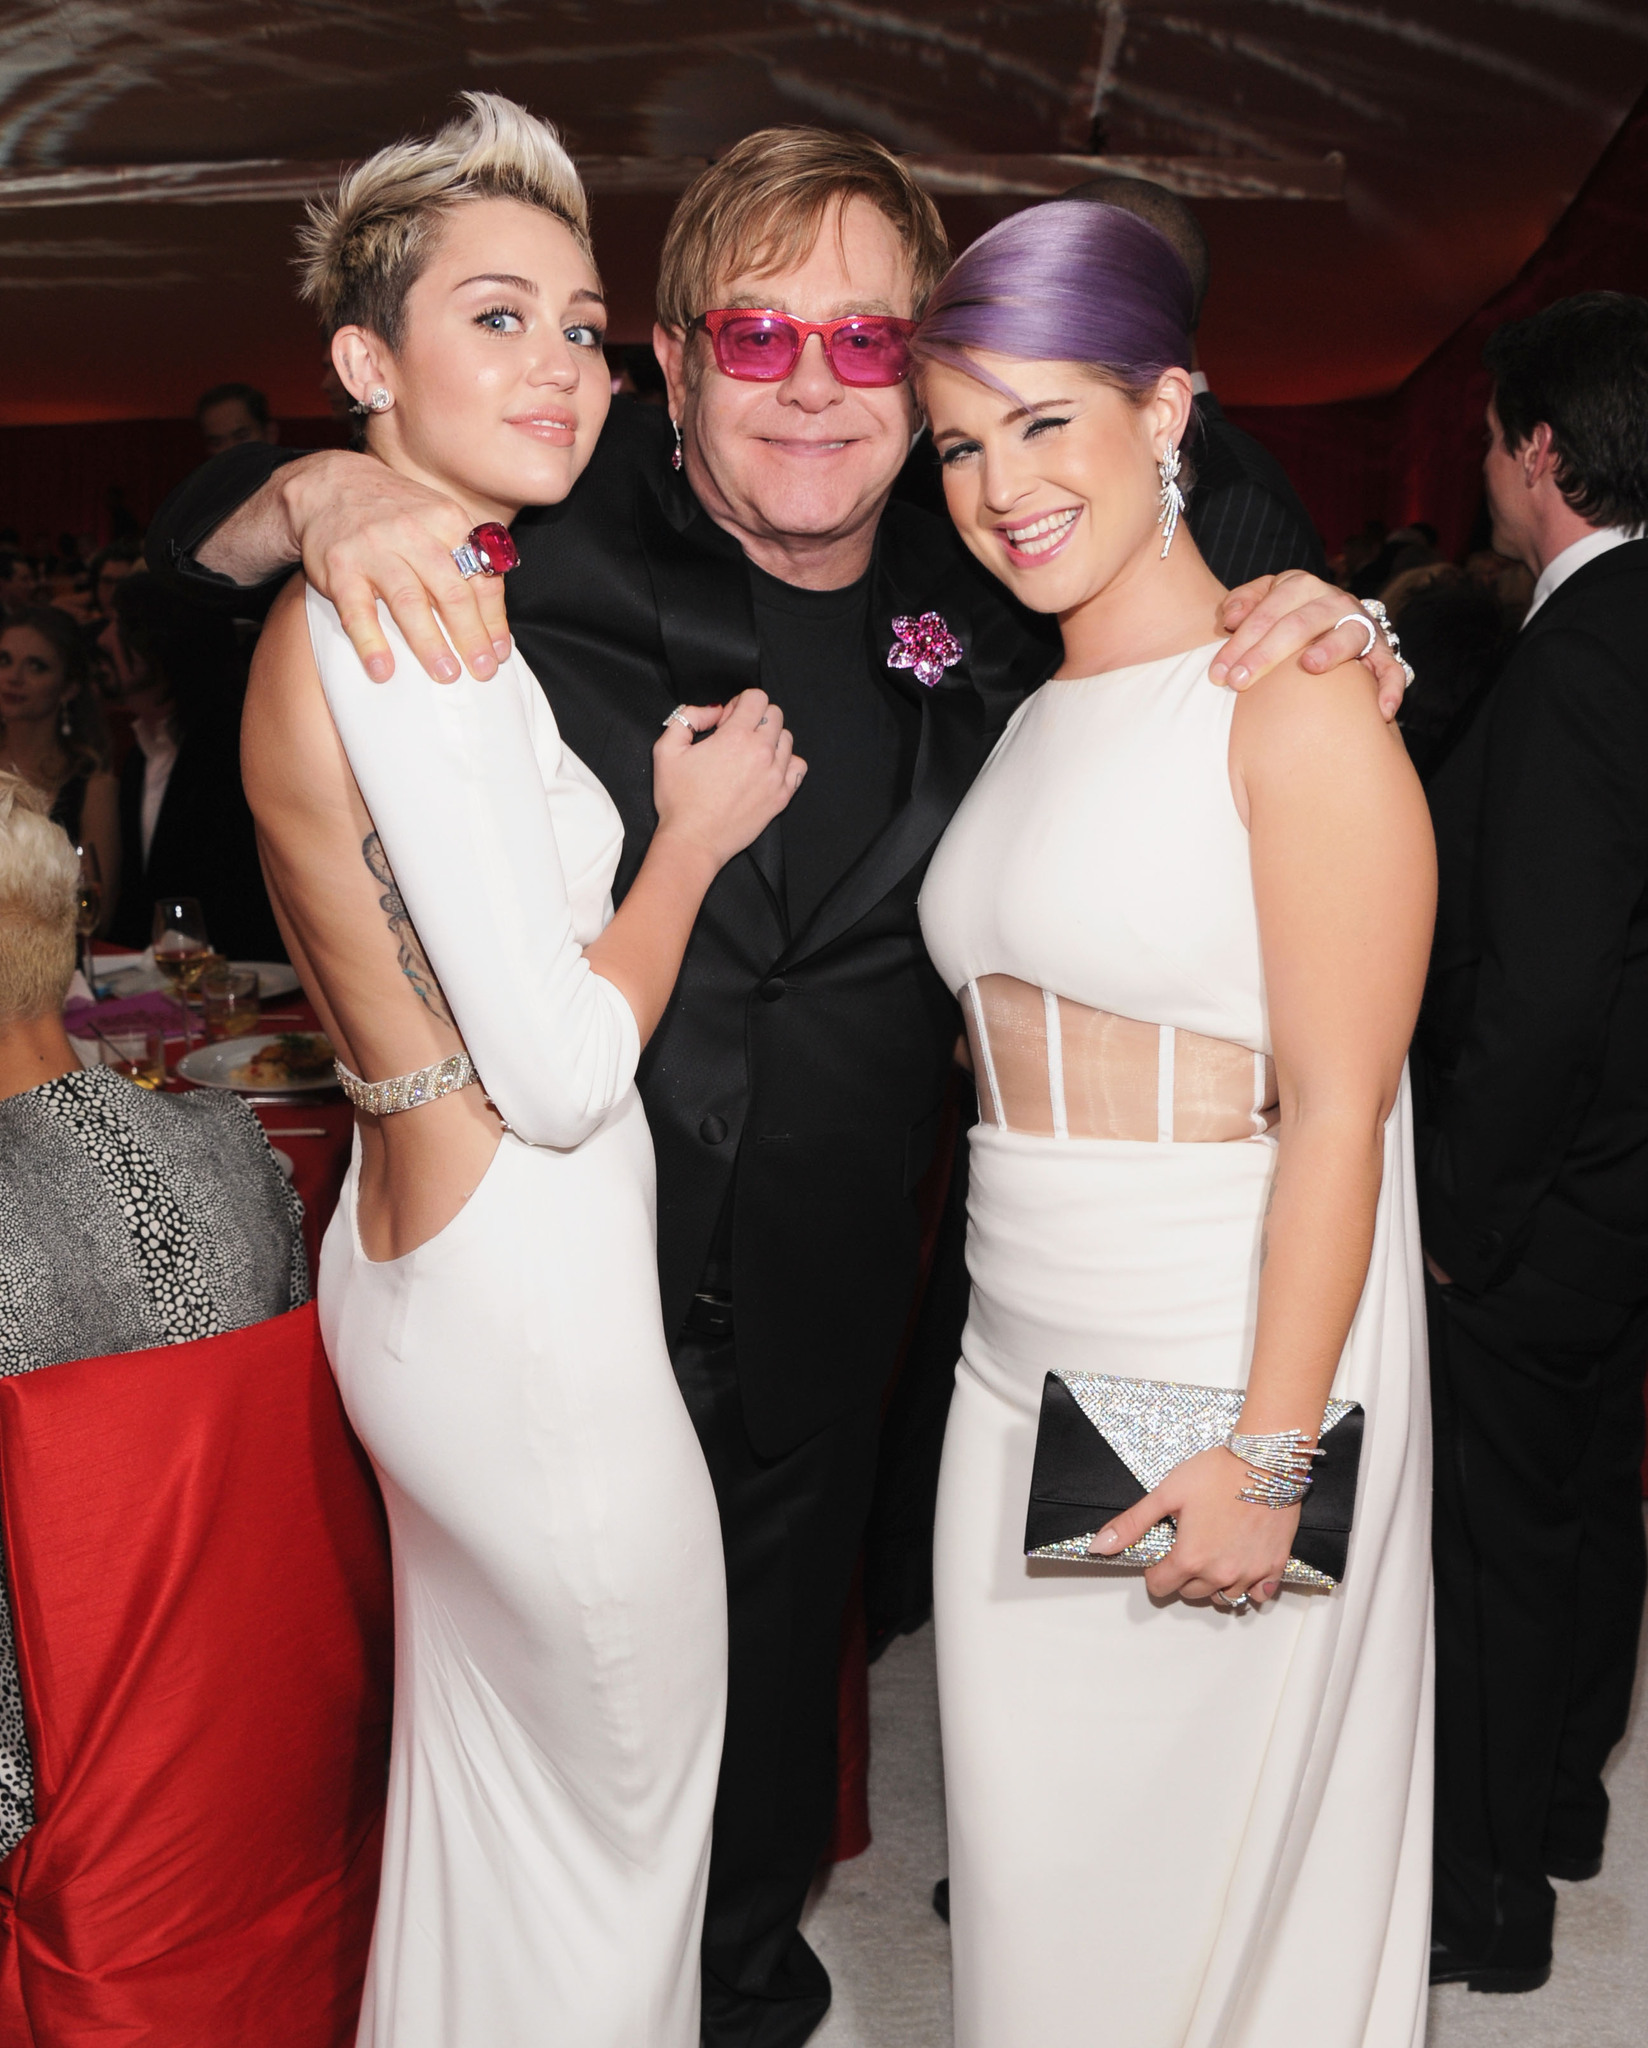 Elton John, Kelly Osbourne and Miley Cyrus